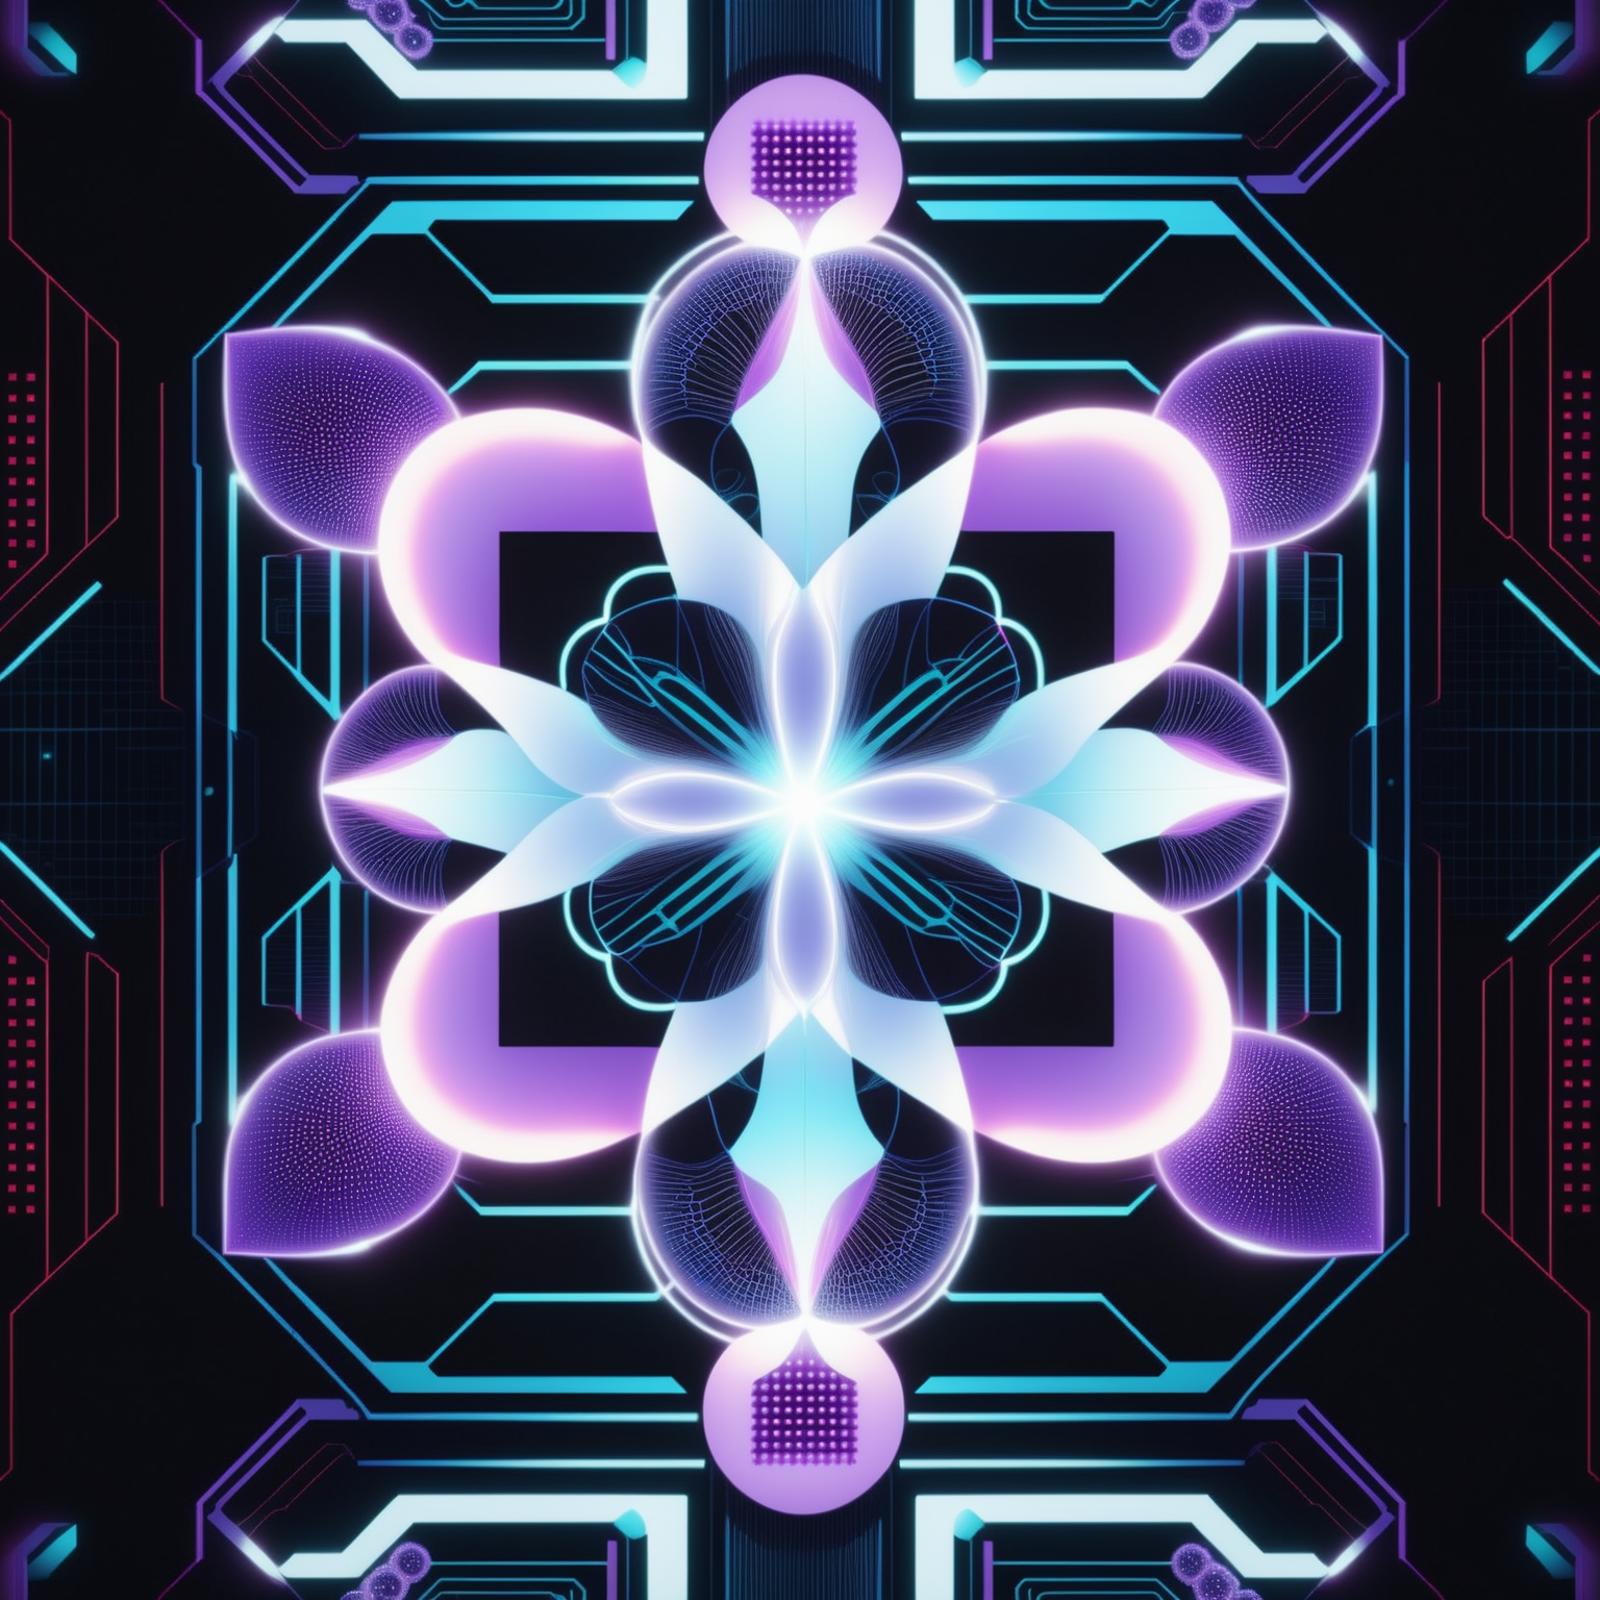 WildCardX-XL-Fusion image by NEUROCORE